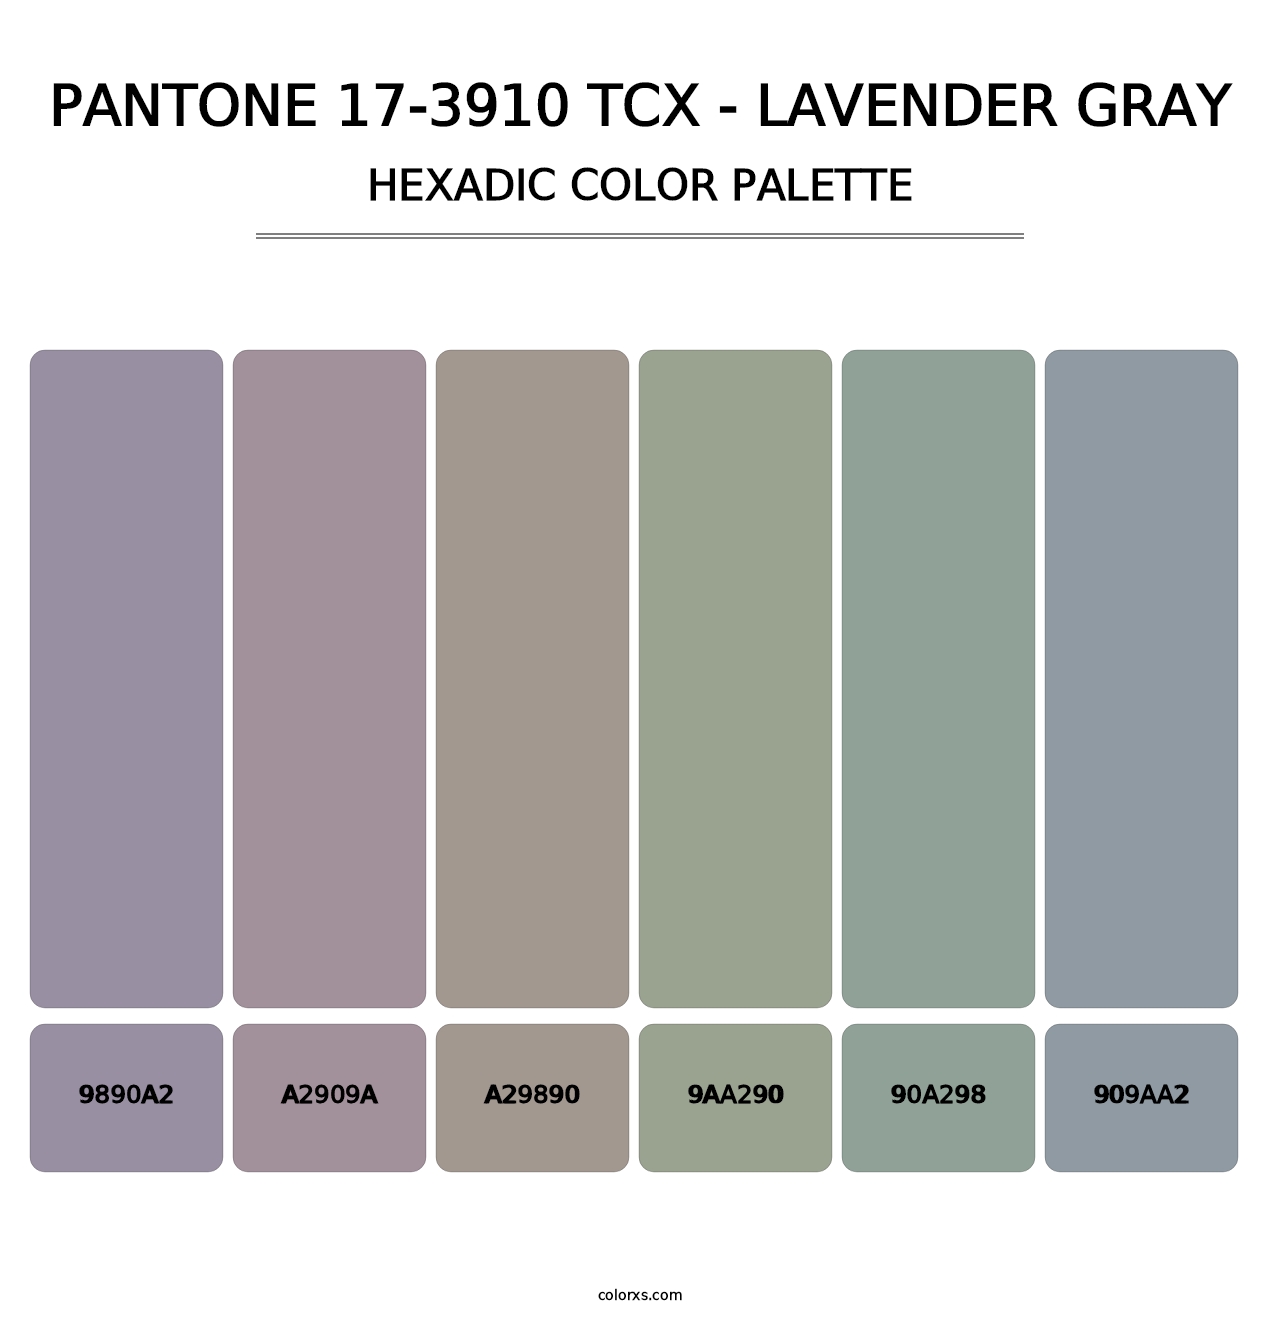 PANTONE 17-3910 TCX - Lavender Gray - Hexadic Color Palette